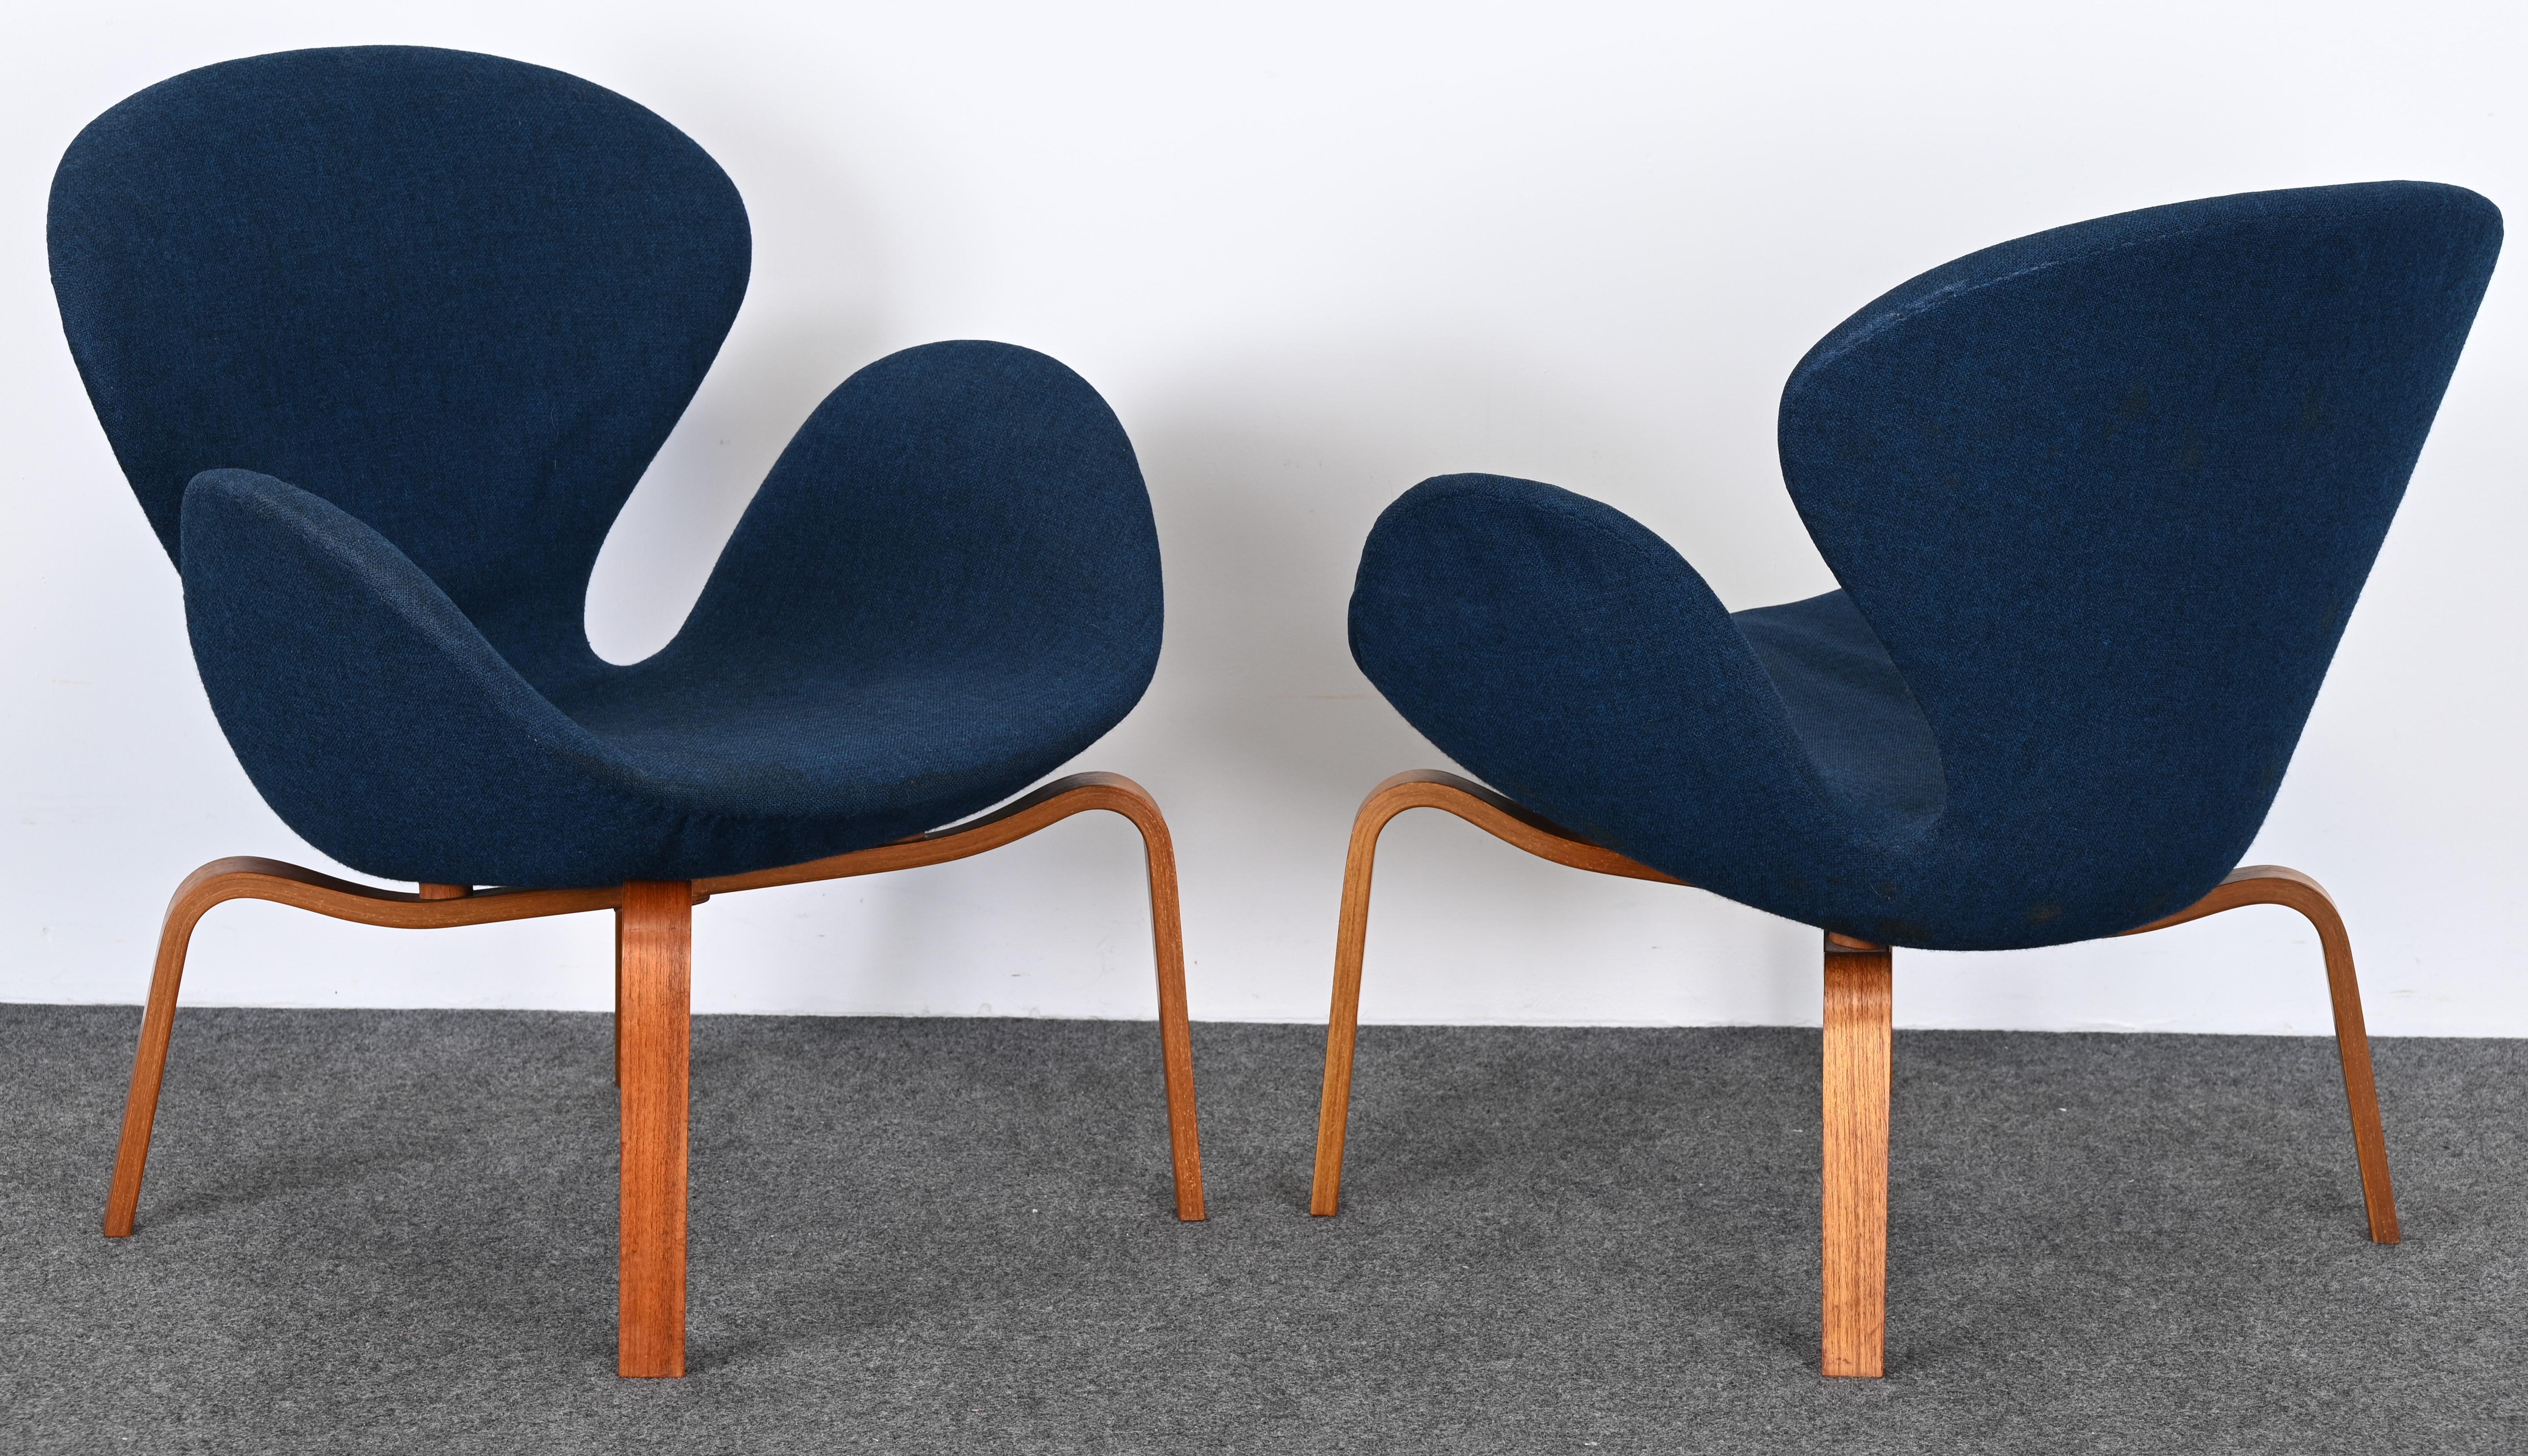 An Iconic Mid-Century Modern pair of Arne Jacobsen 